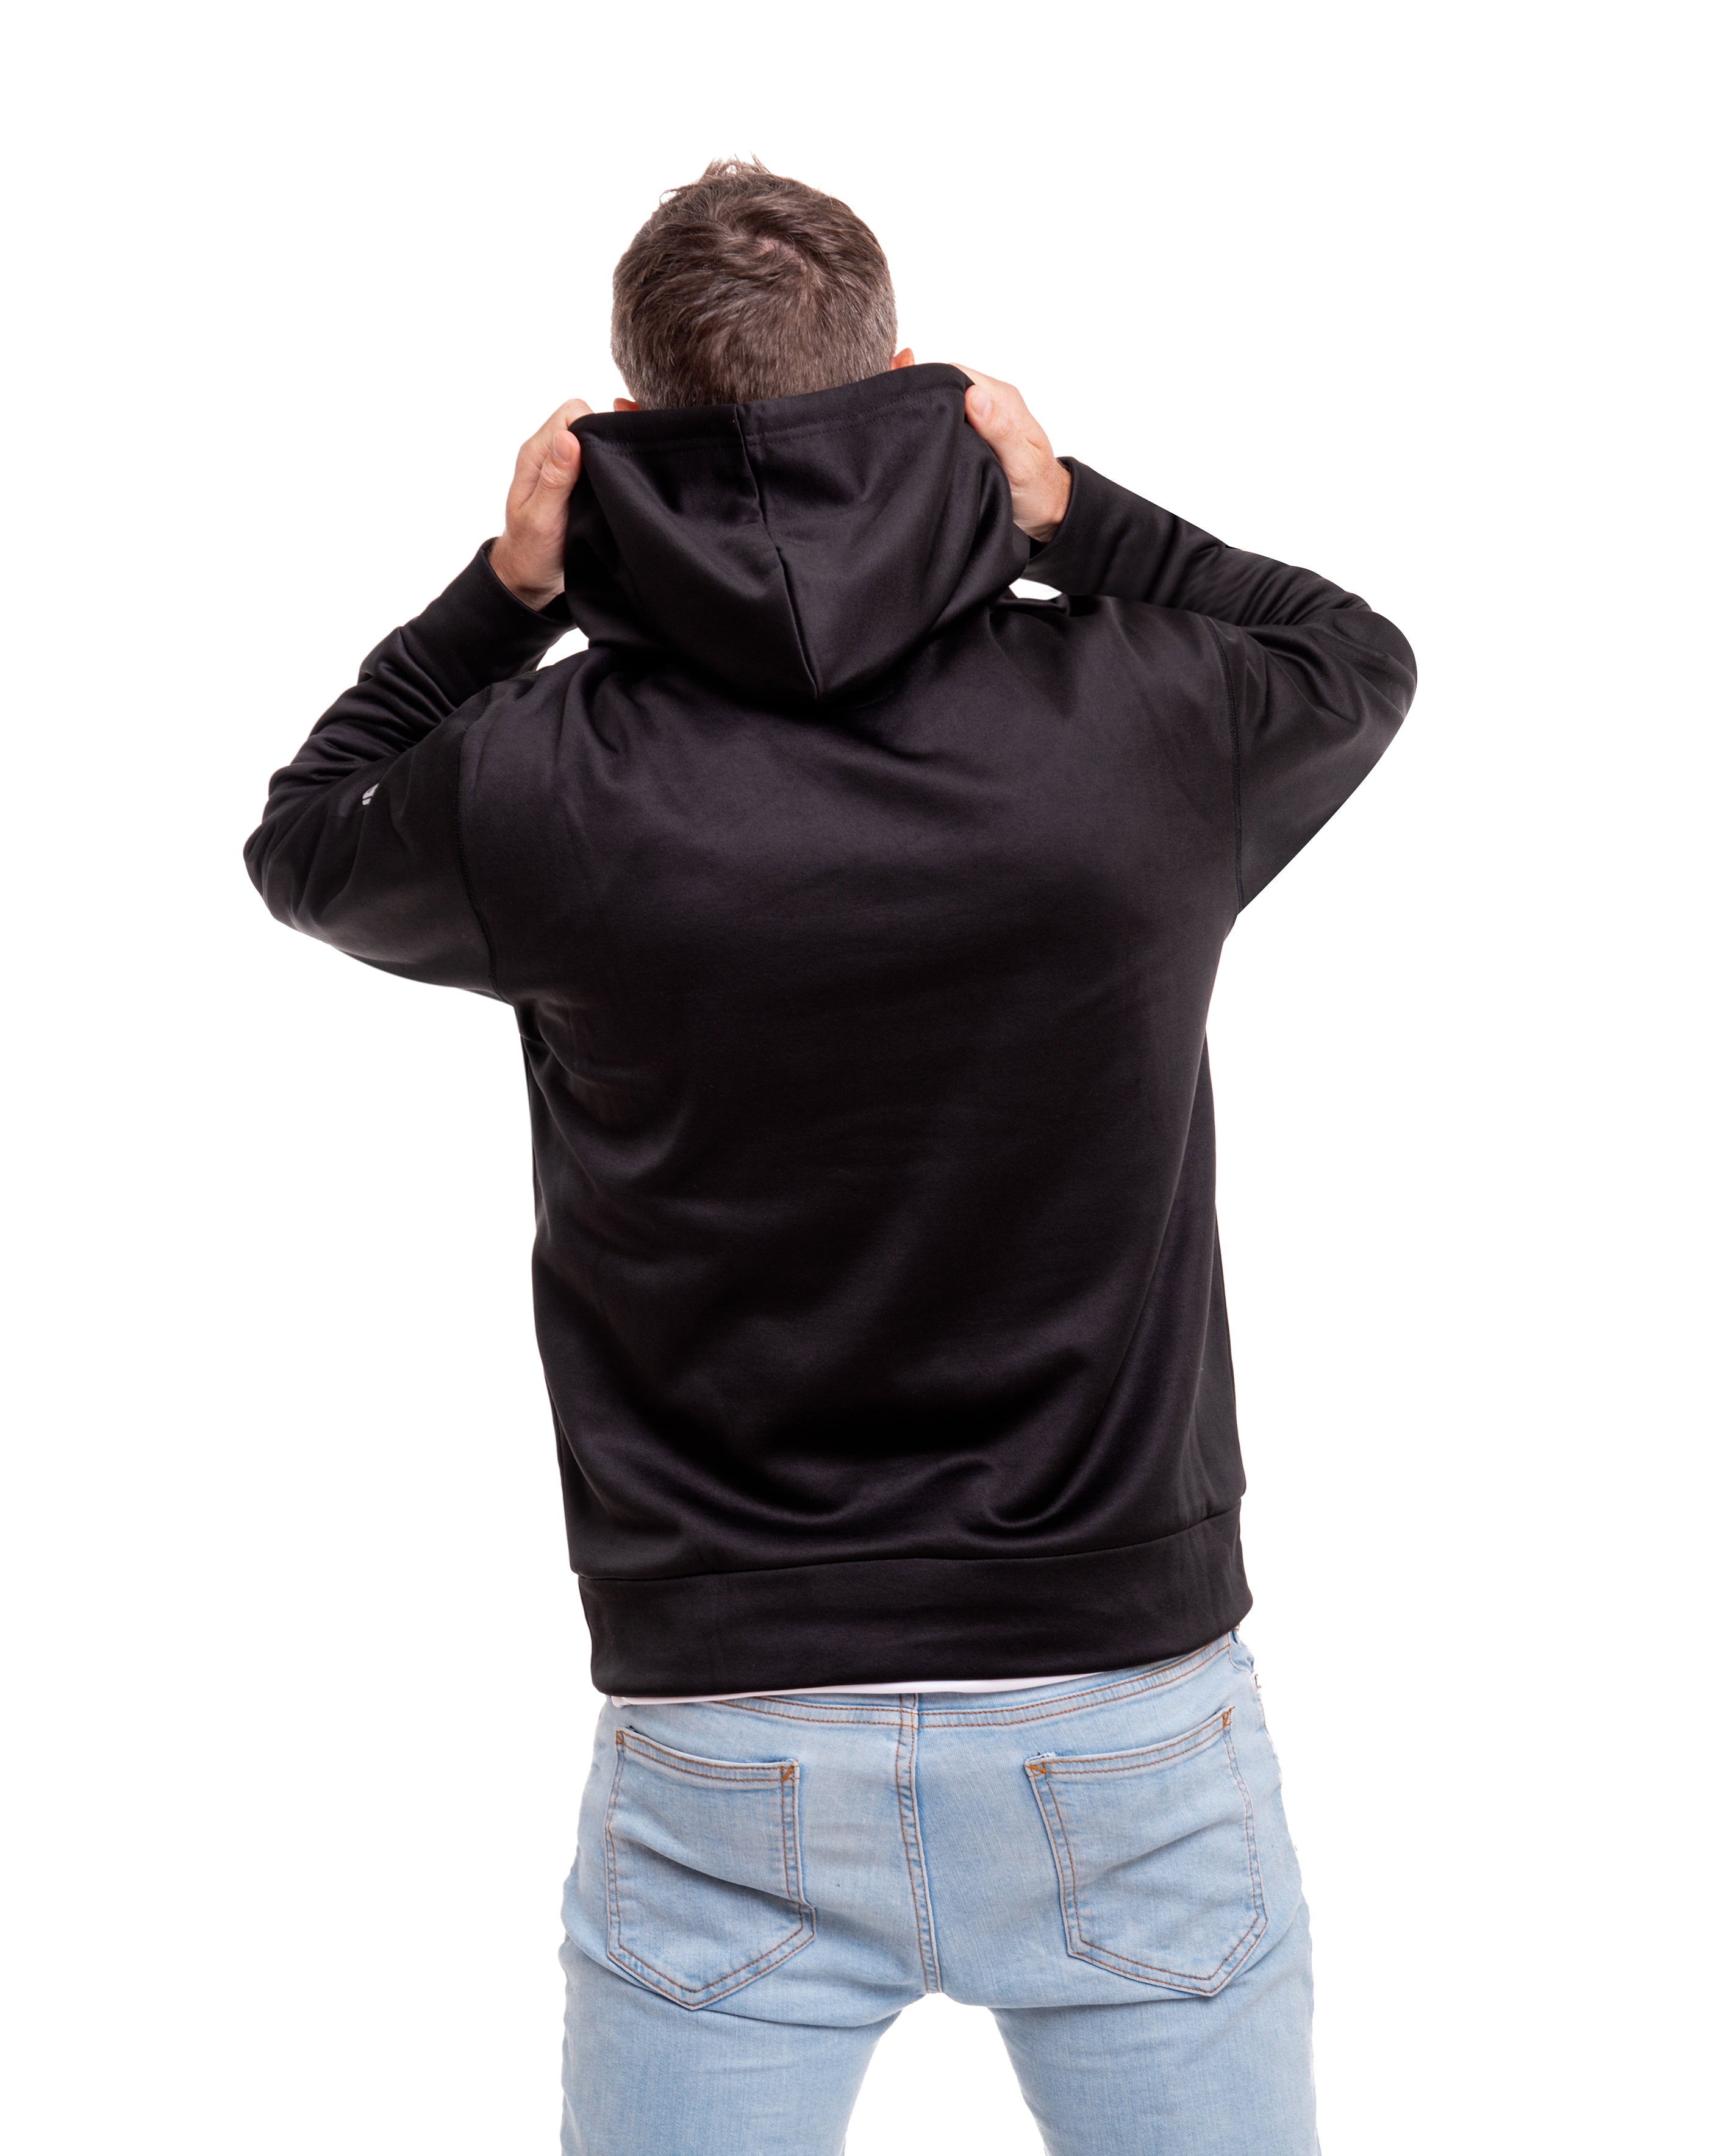 Men's Active Pullover Hoodie w/ Pockets